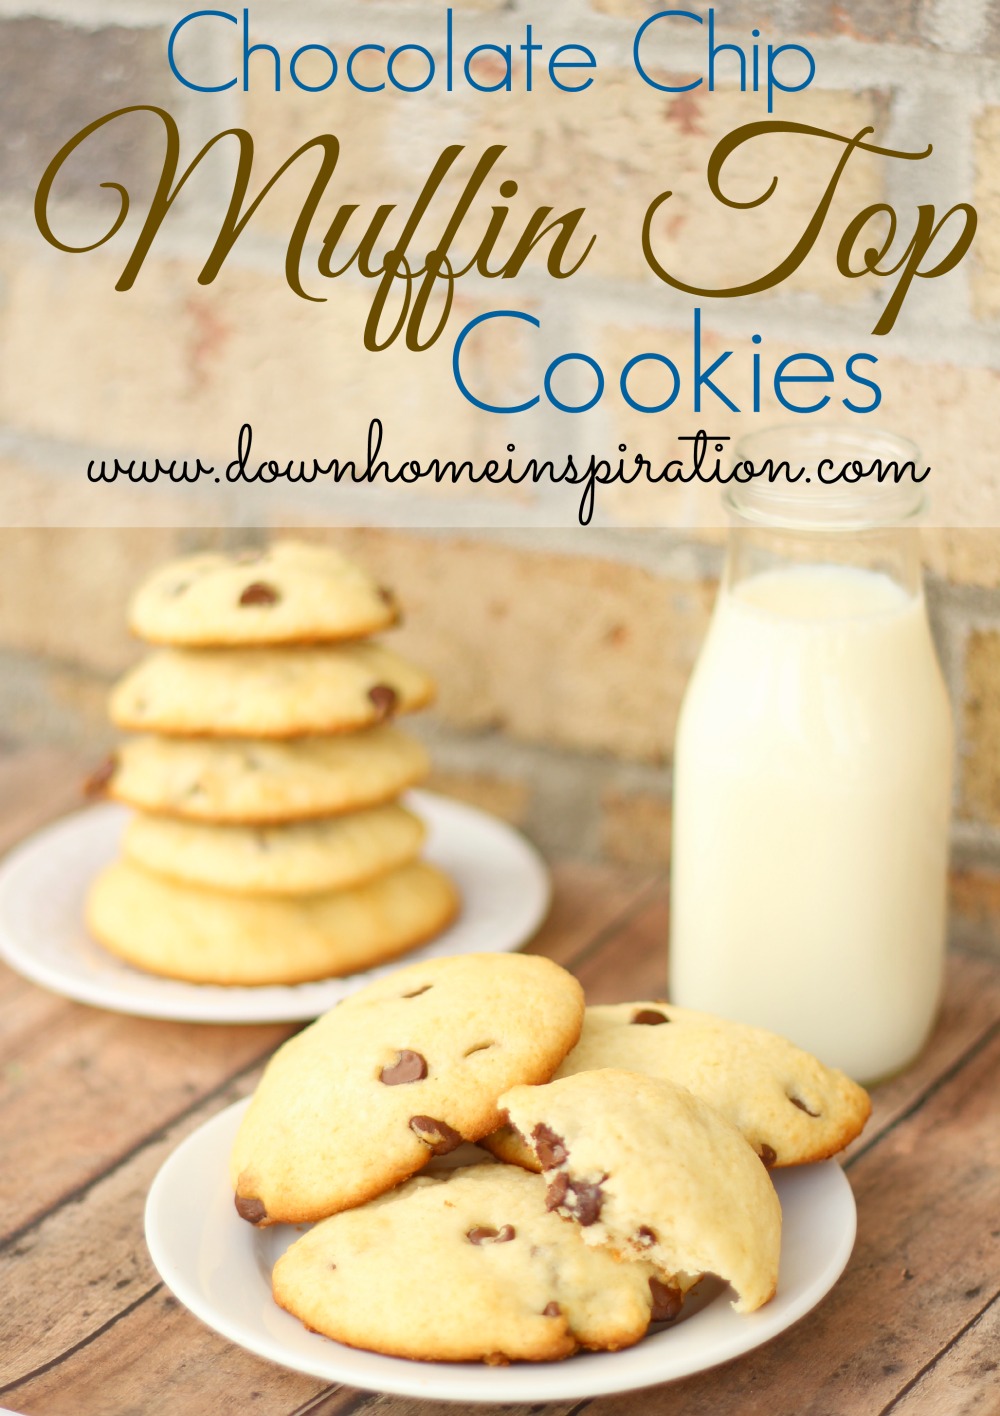 https://www.downhomeinspiration.com/wp-content/uploads/2014/03/muffin-top-cookies-1.jpg